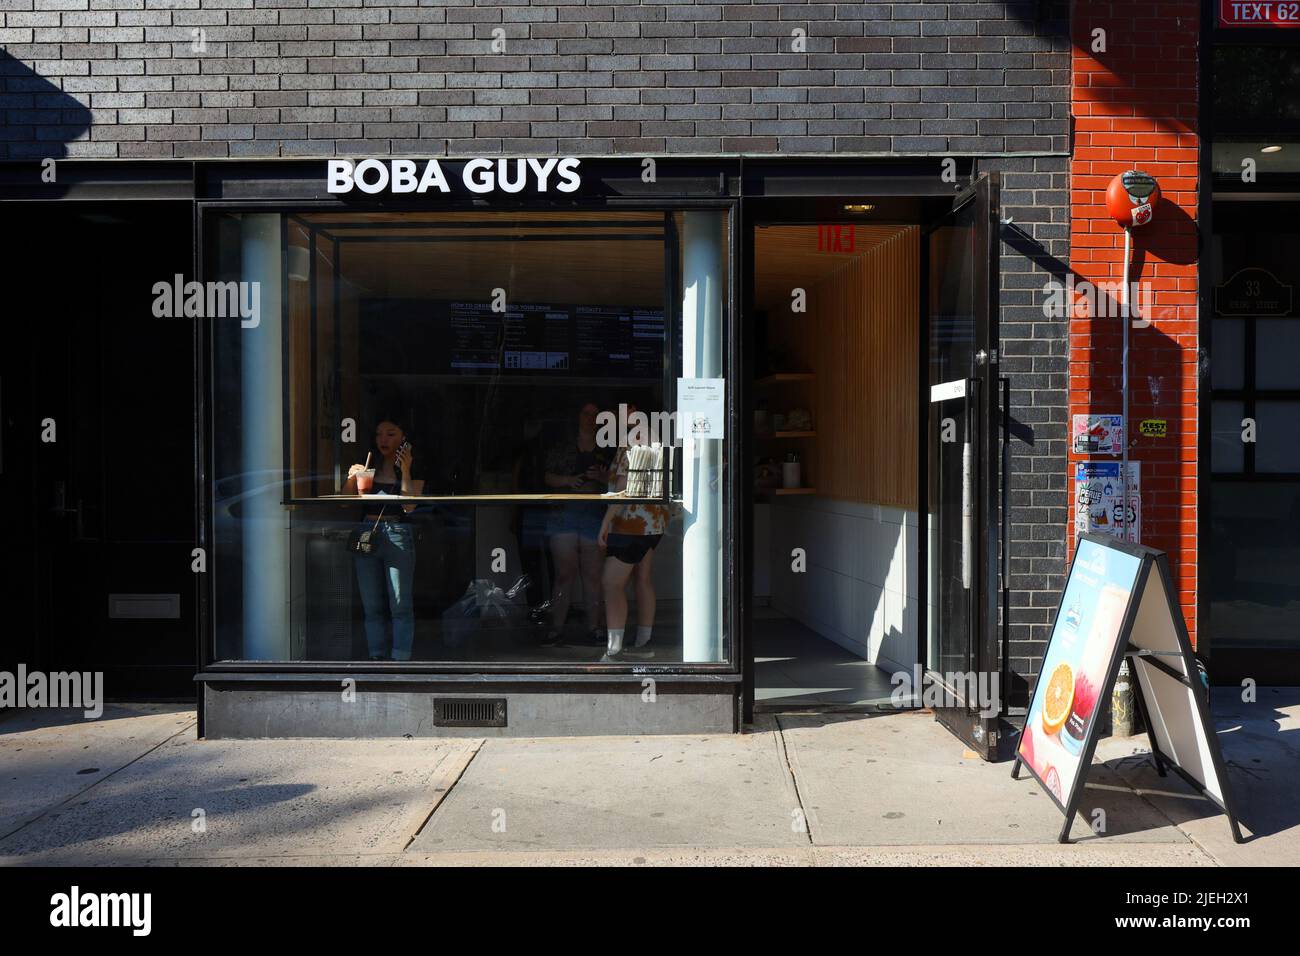 Boba Guys, 35 Spring St, New York, NY. exterior storefront of a bubble tea shop in the Nolita neighborhood in Manhattan. Stock Photo